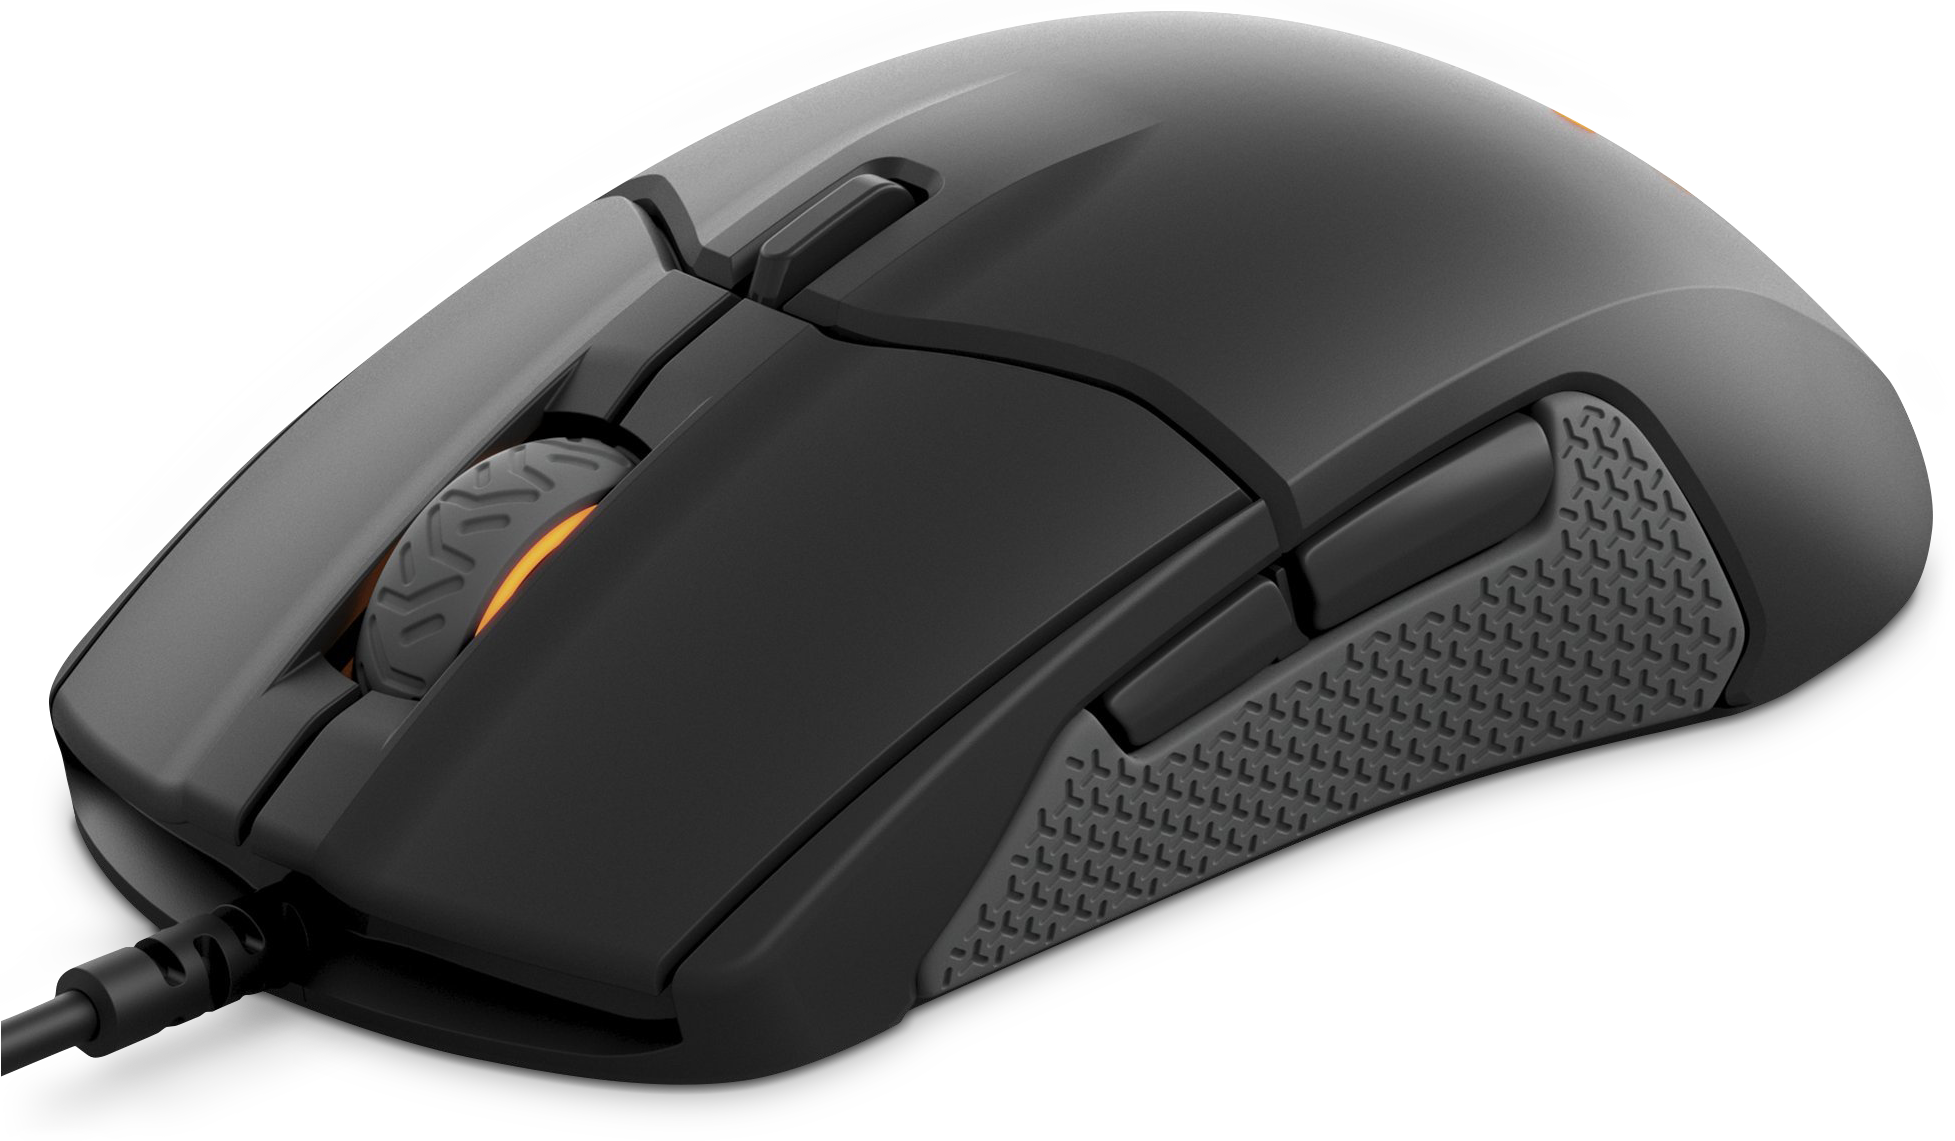 Buy Sensei 310 Gaming Mouse - Microsoft Store